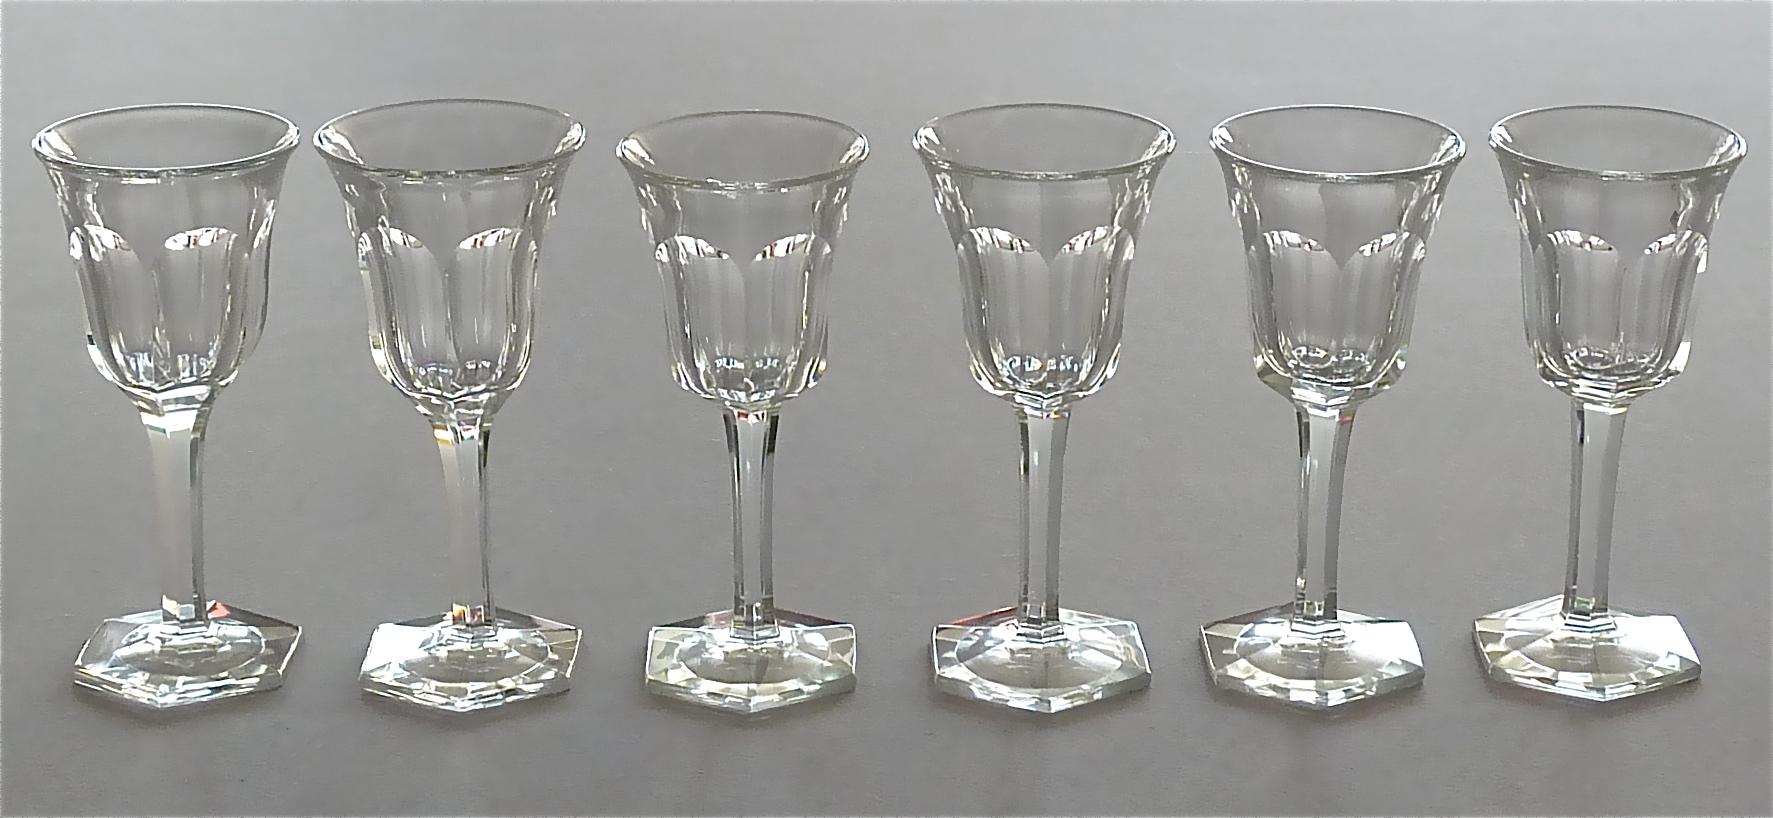 art deco style wine glasses